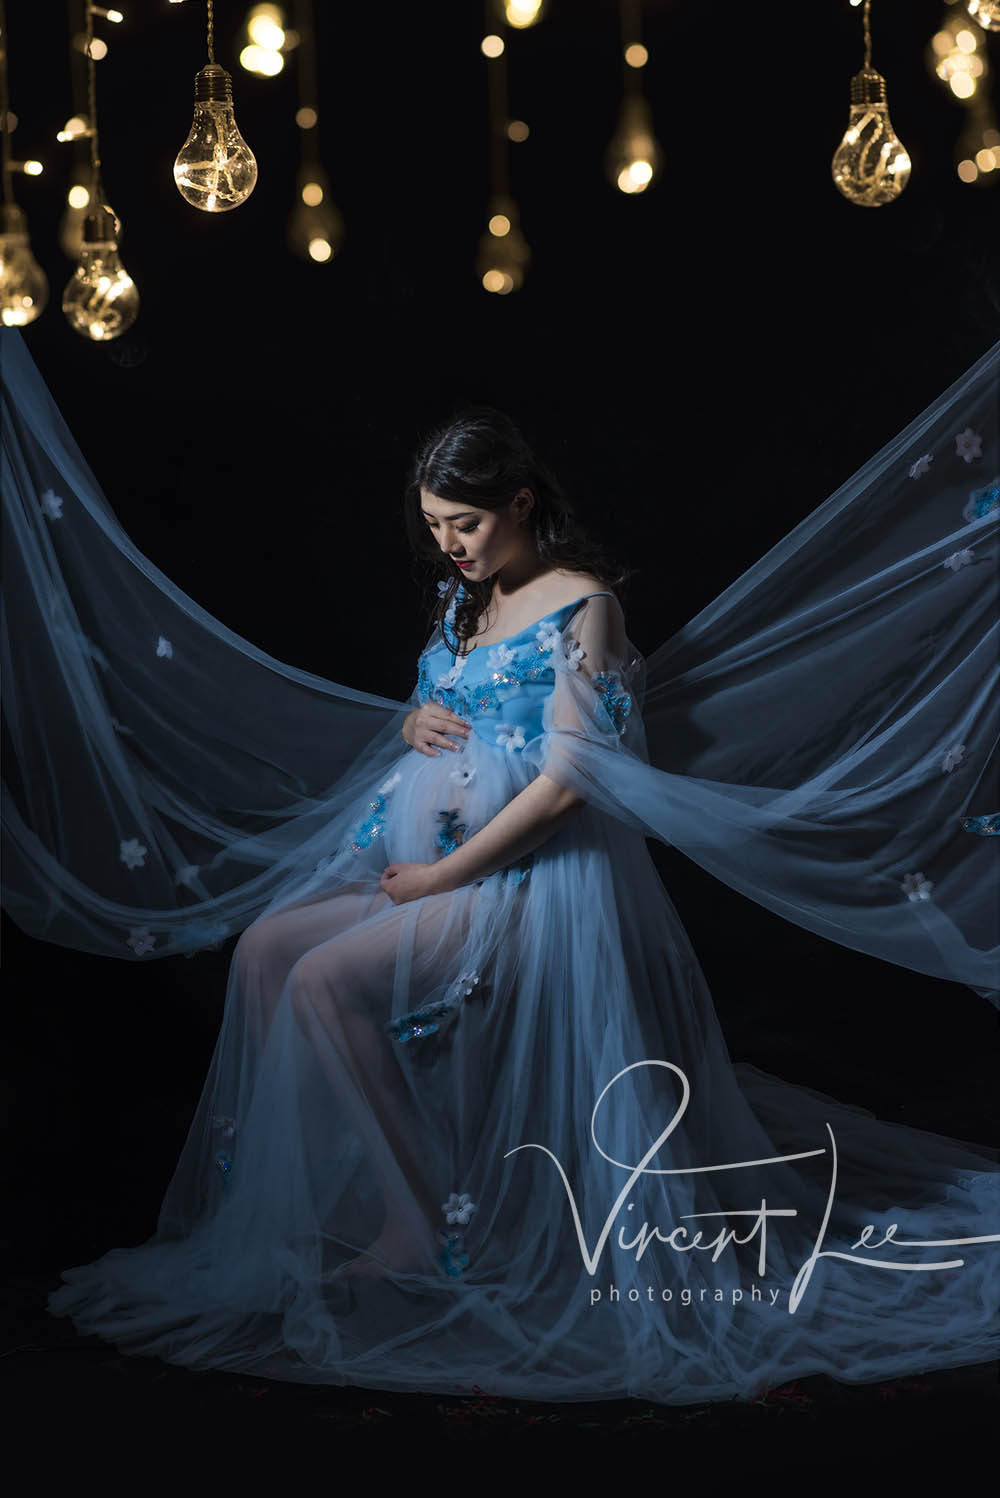 #Maternity #makeupservices #malaysia #studio #photography #awardwinningphotographer #internationalacclaimed #creative #unique #pregnant #beauty #Nikon #Elinchrom 